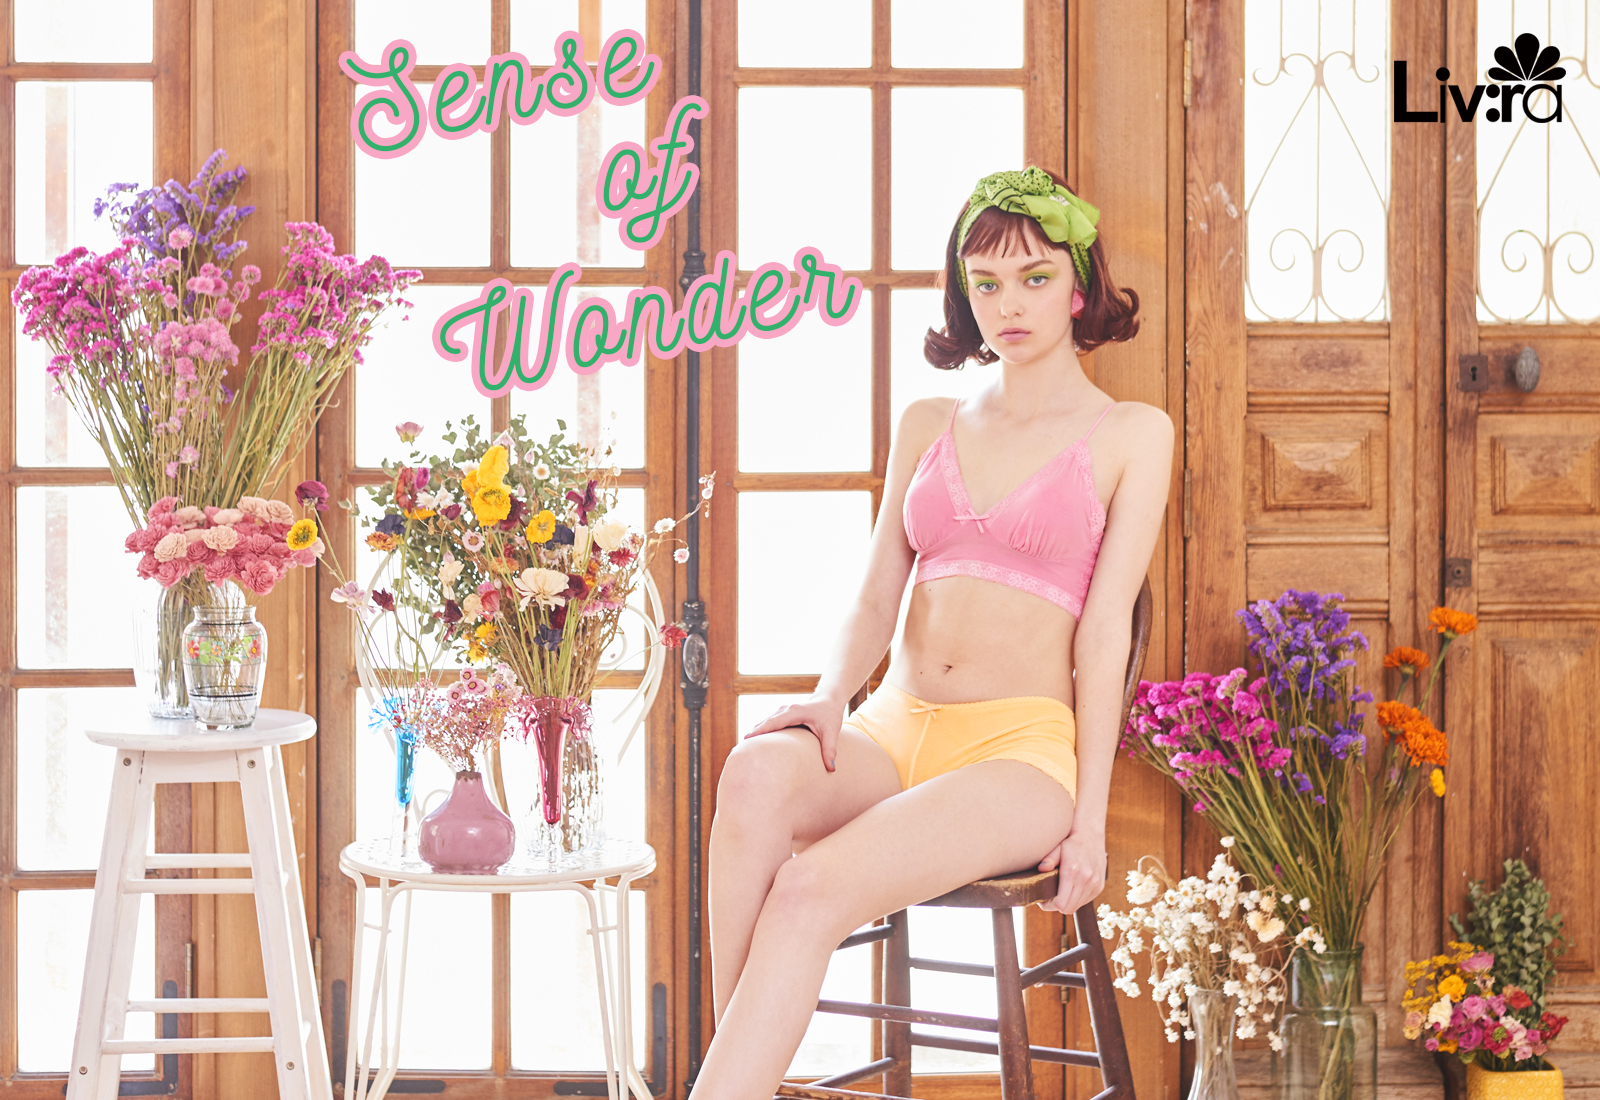 Liv:ra New Collection "Sense of Wonder"